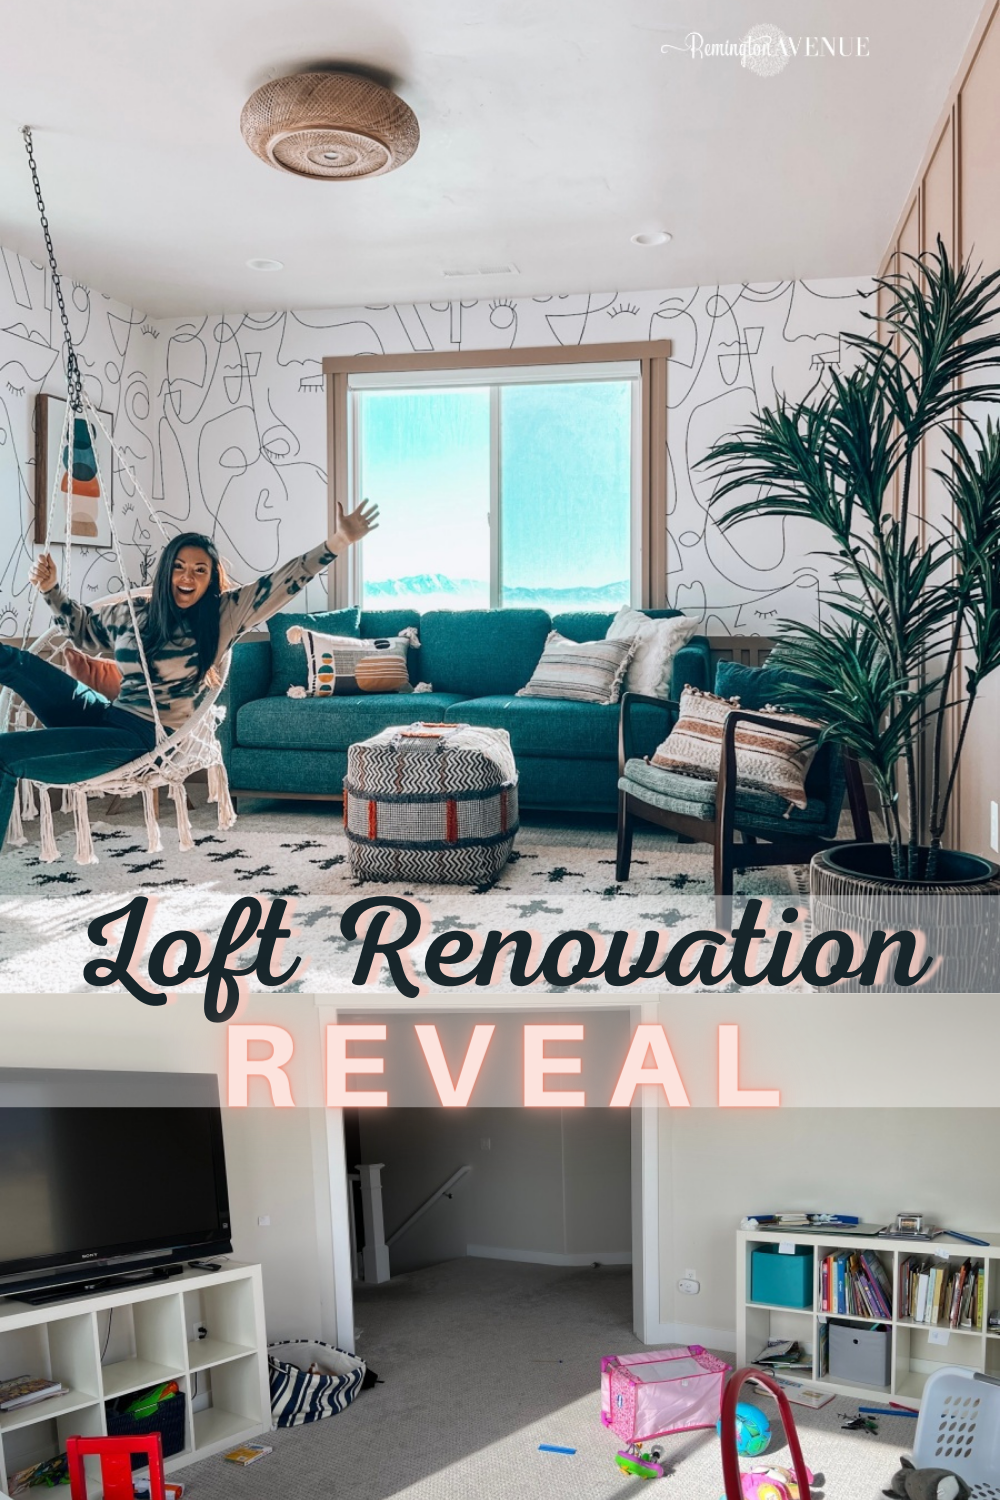 Sister's Loft Renovation Reveal - Remington Avenue